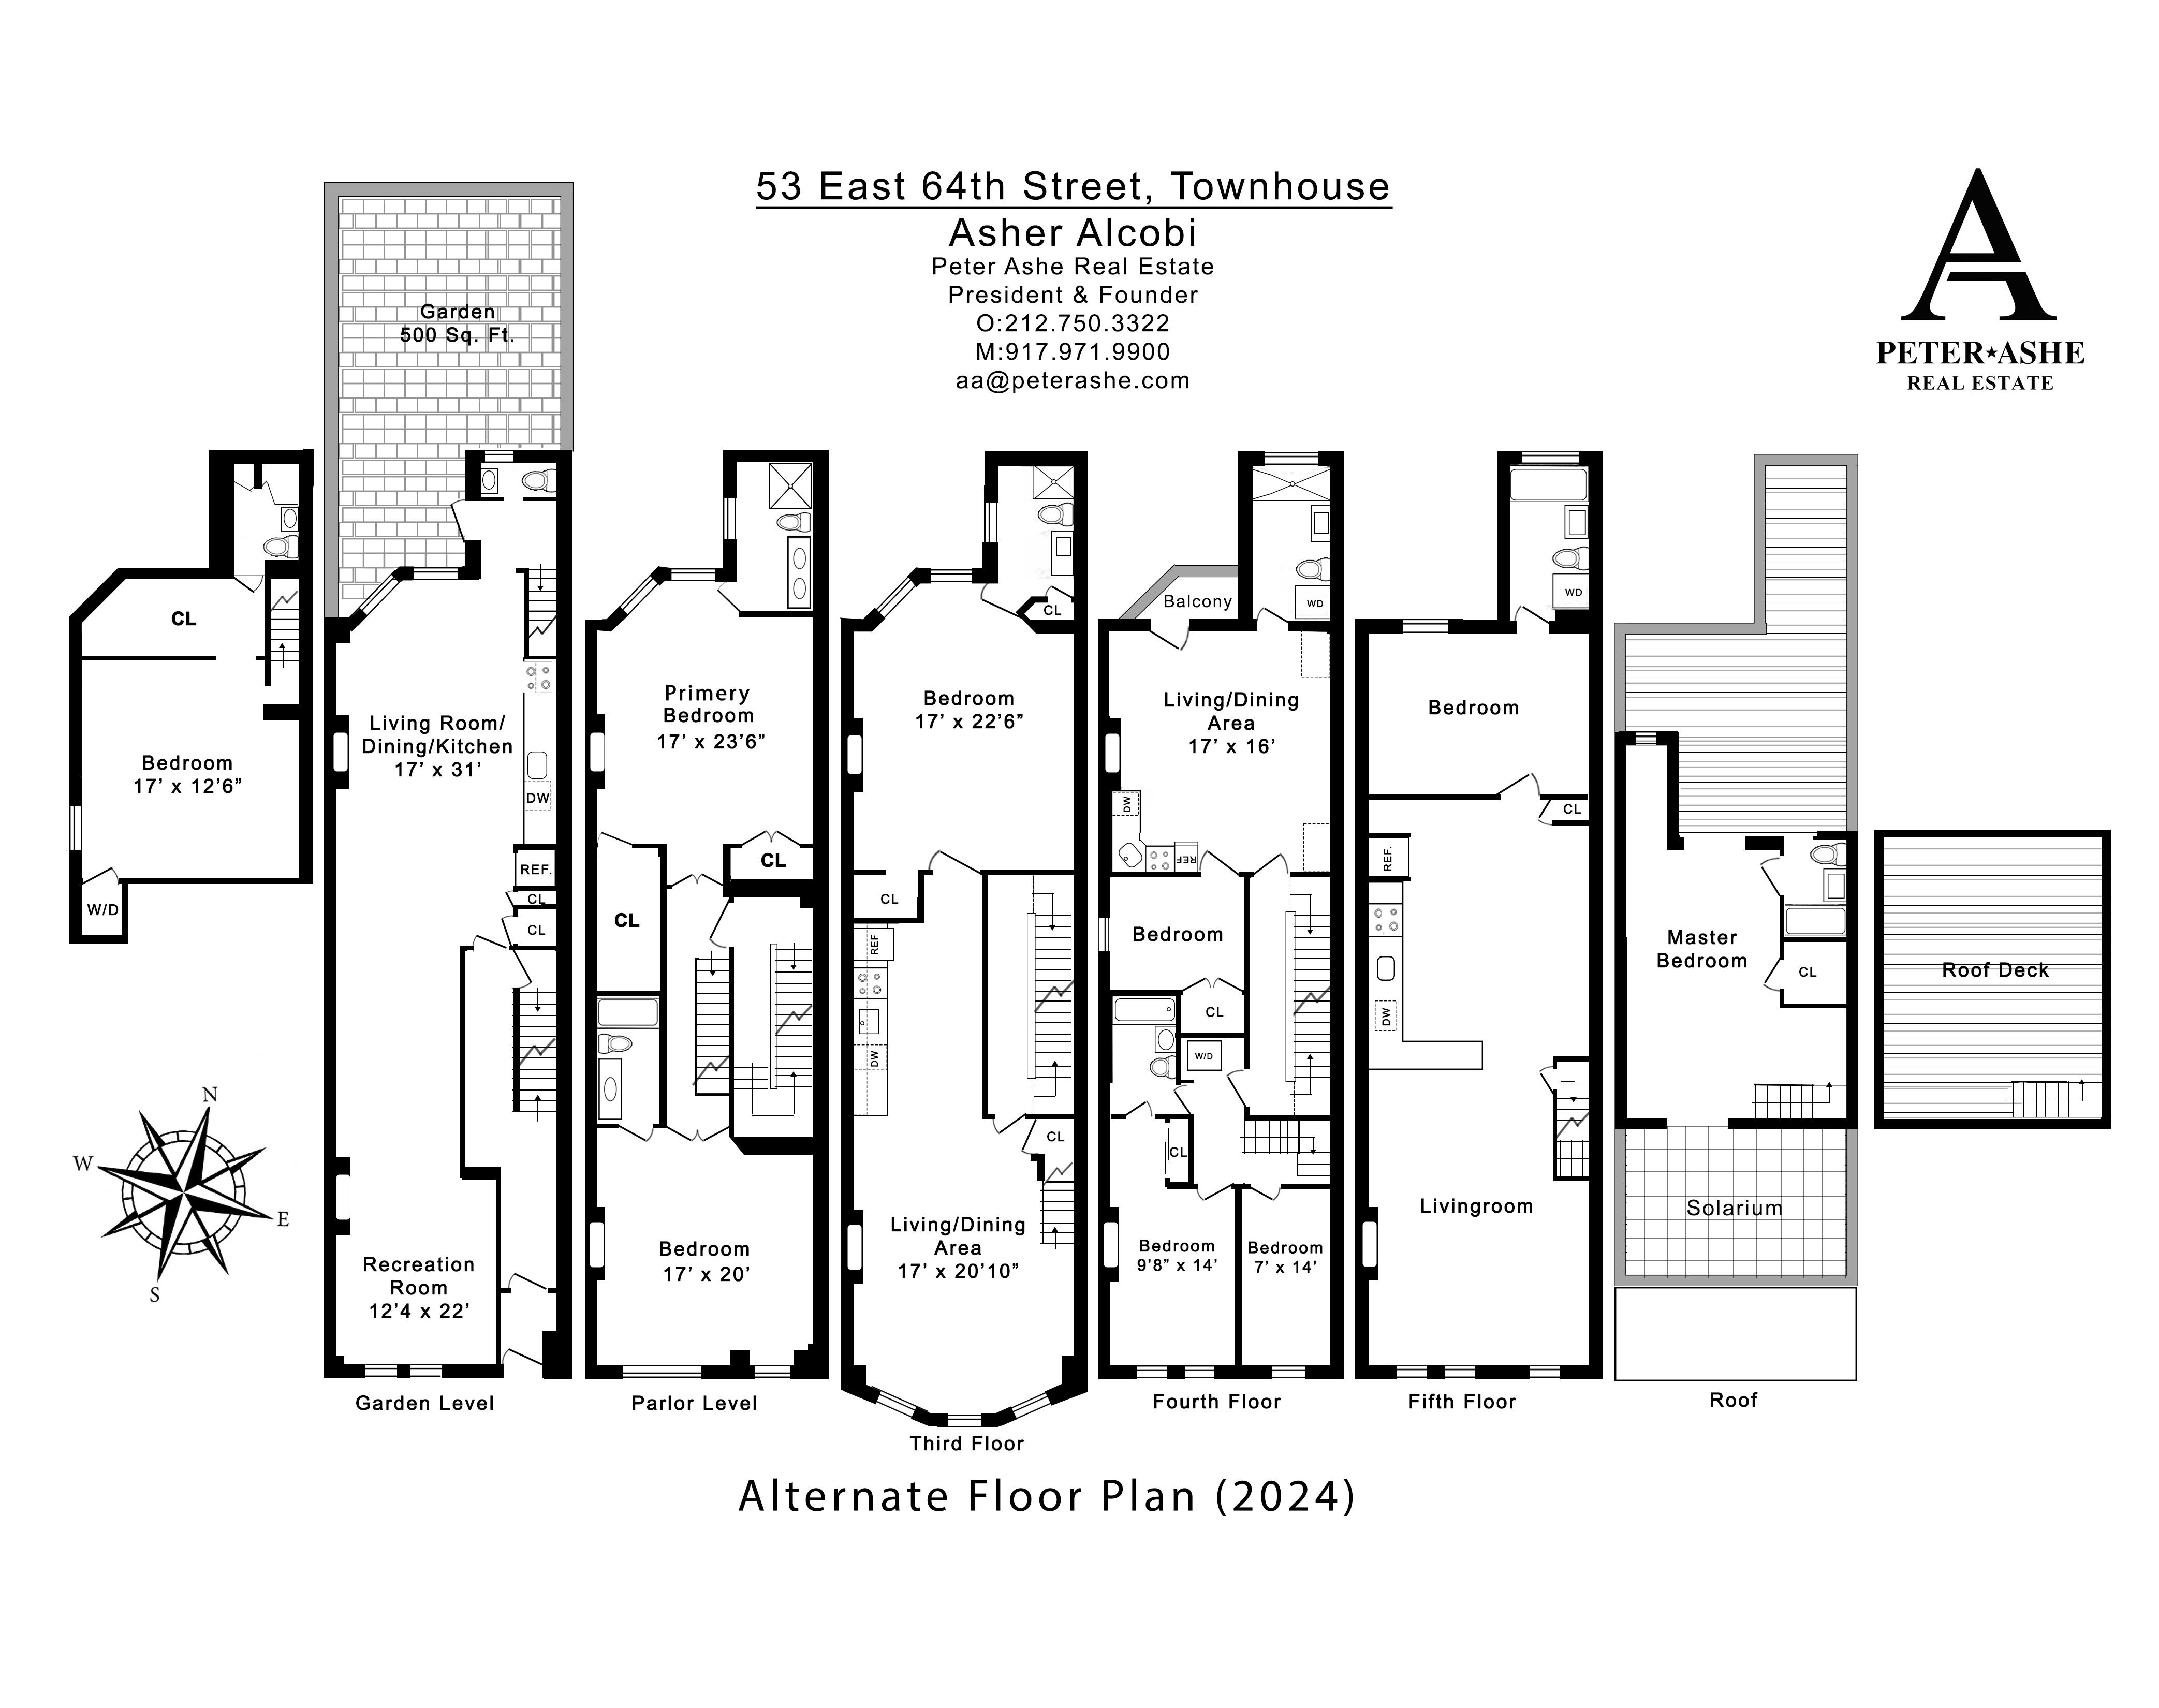 Floorplan for 53 East 64th Street